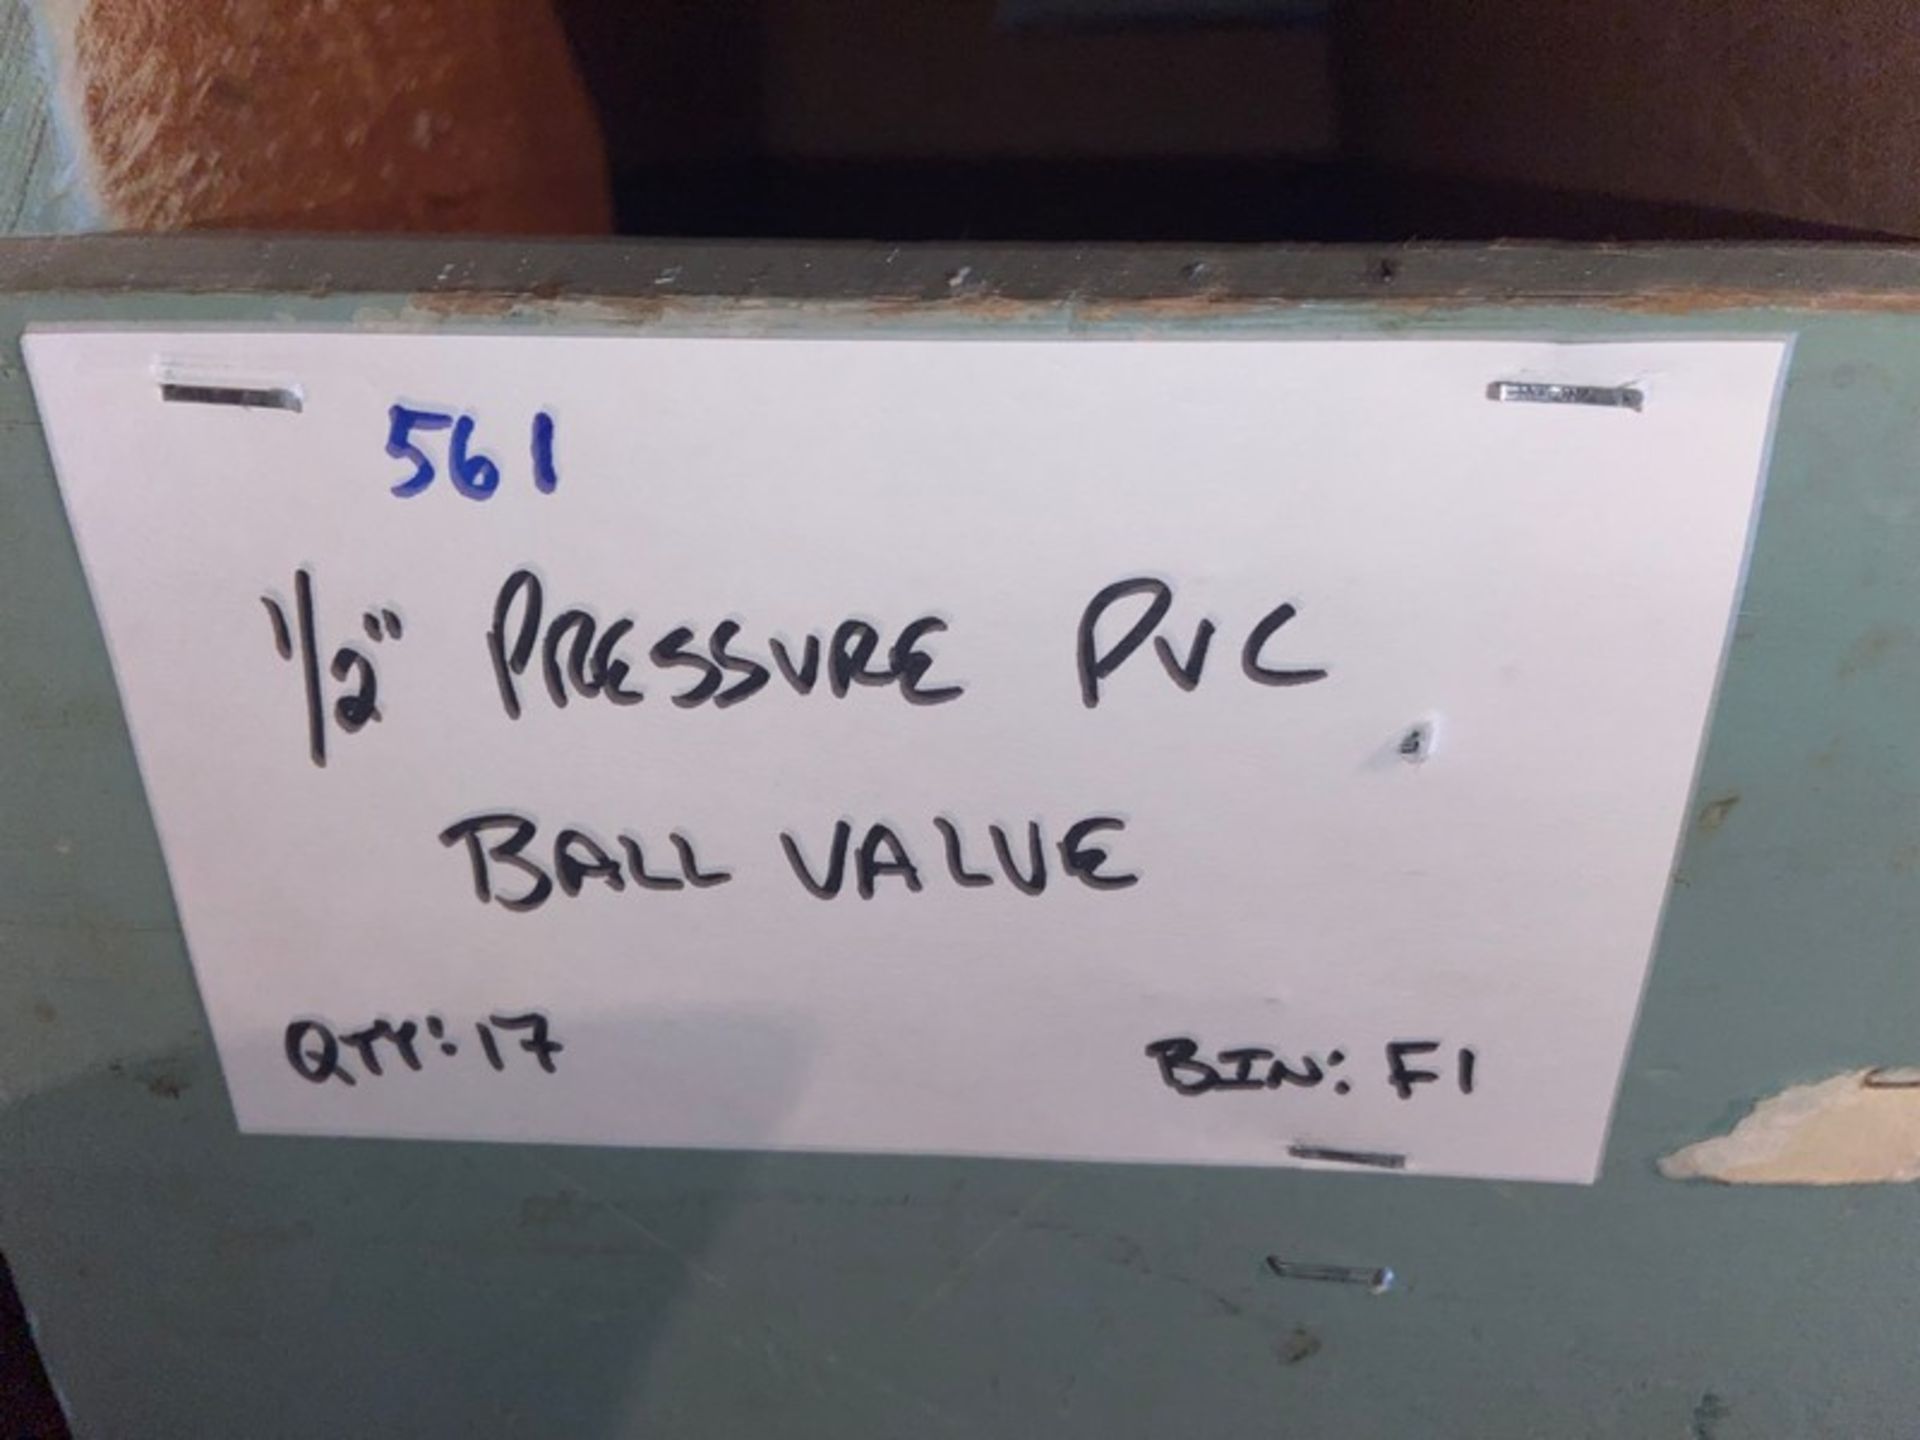 (17) 1/2" Pressure PVC Ball Valve (Bin: F1); (15) 1/2" Pressure PVC Coupling (Bin: F1) (LOCATED IN - Image 11 of 11